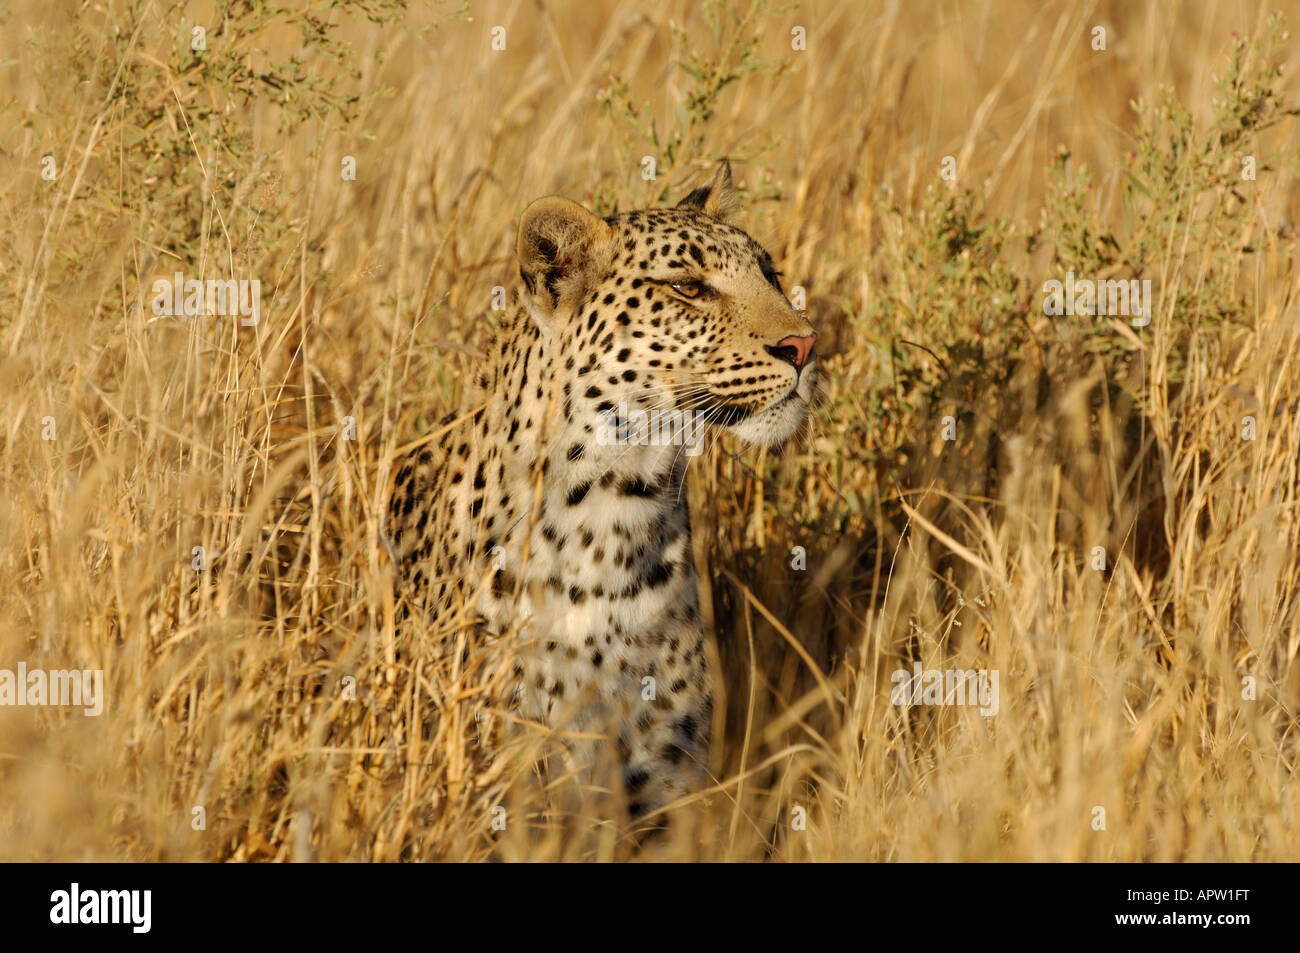 Stock photo of an african leopard sitting in the golden grass, Okavango Delta, Botswana. Stock Photo